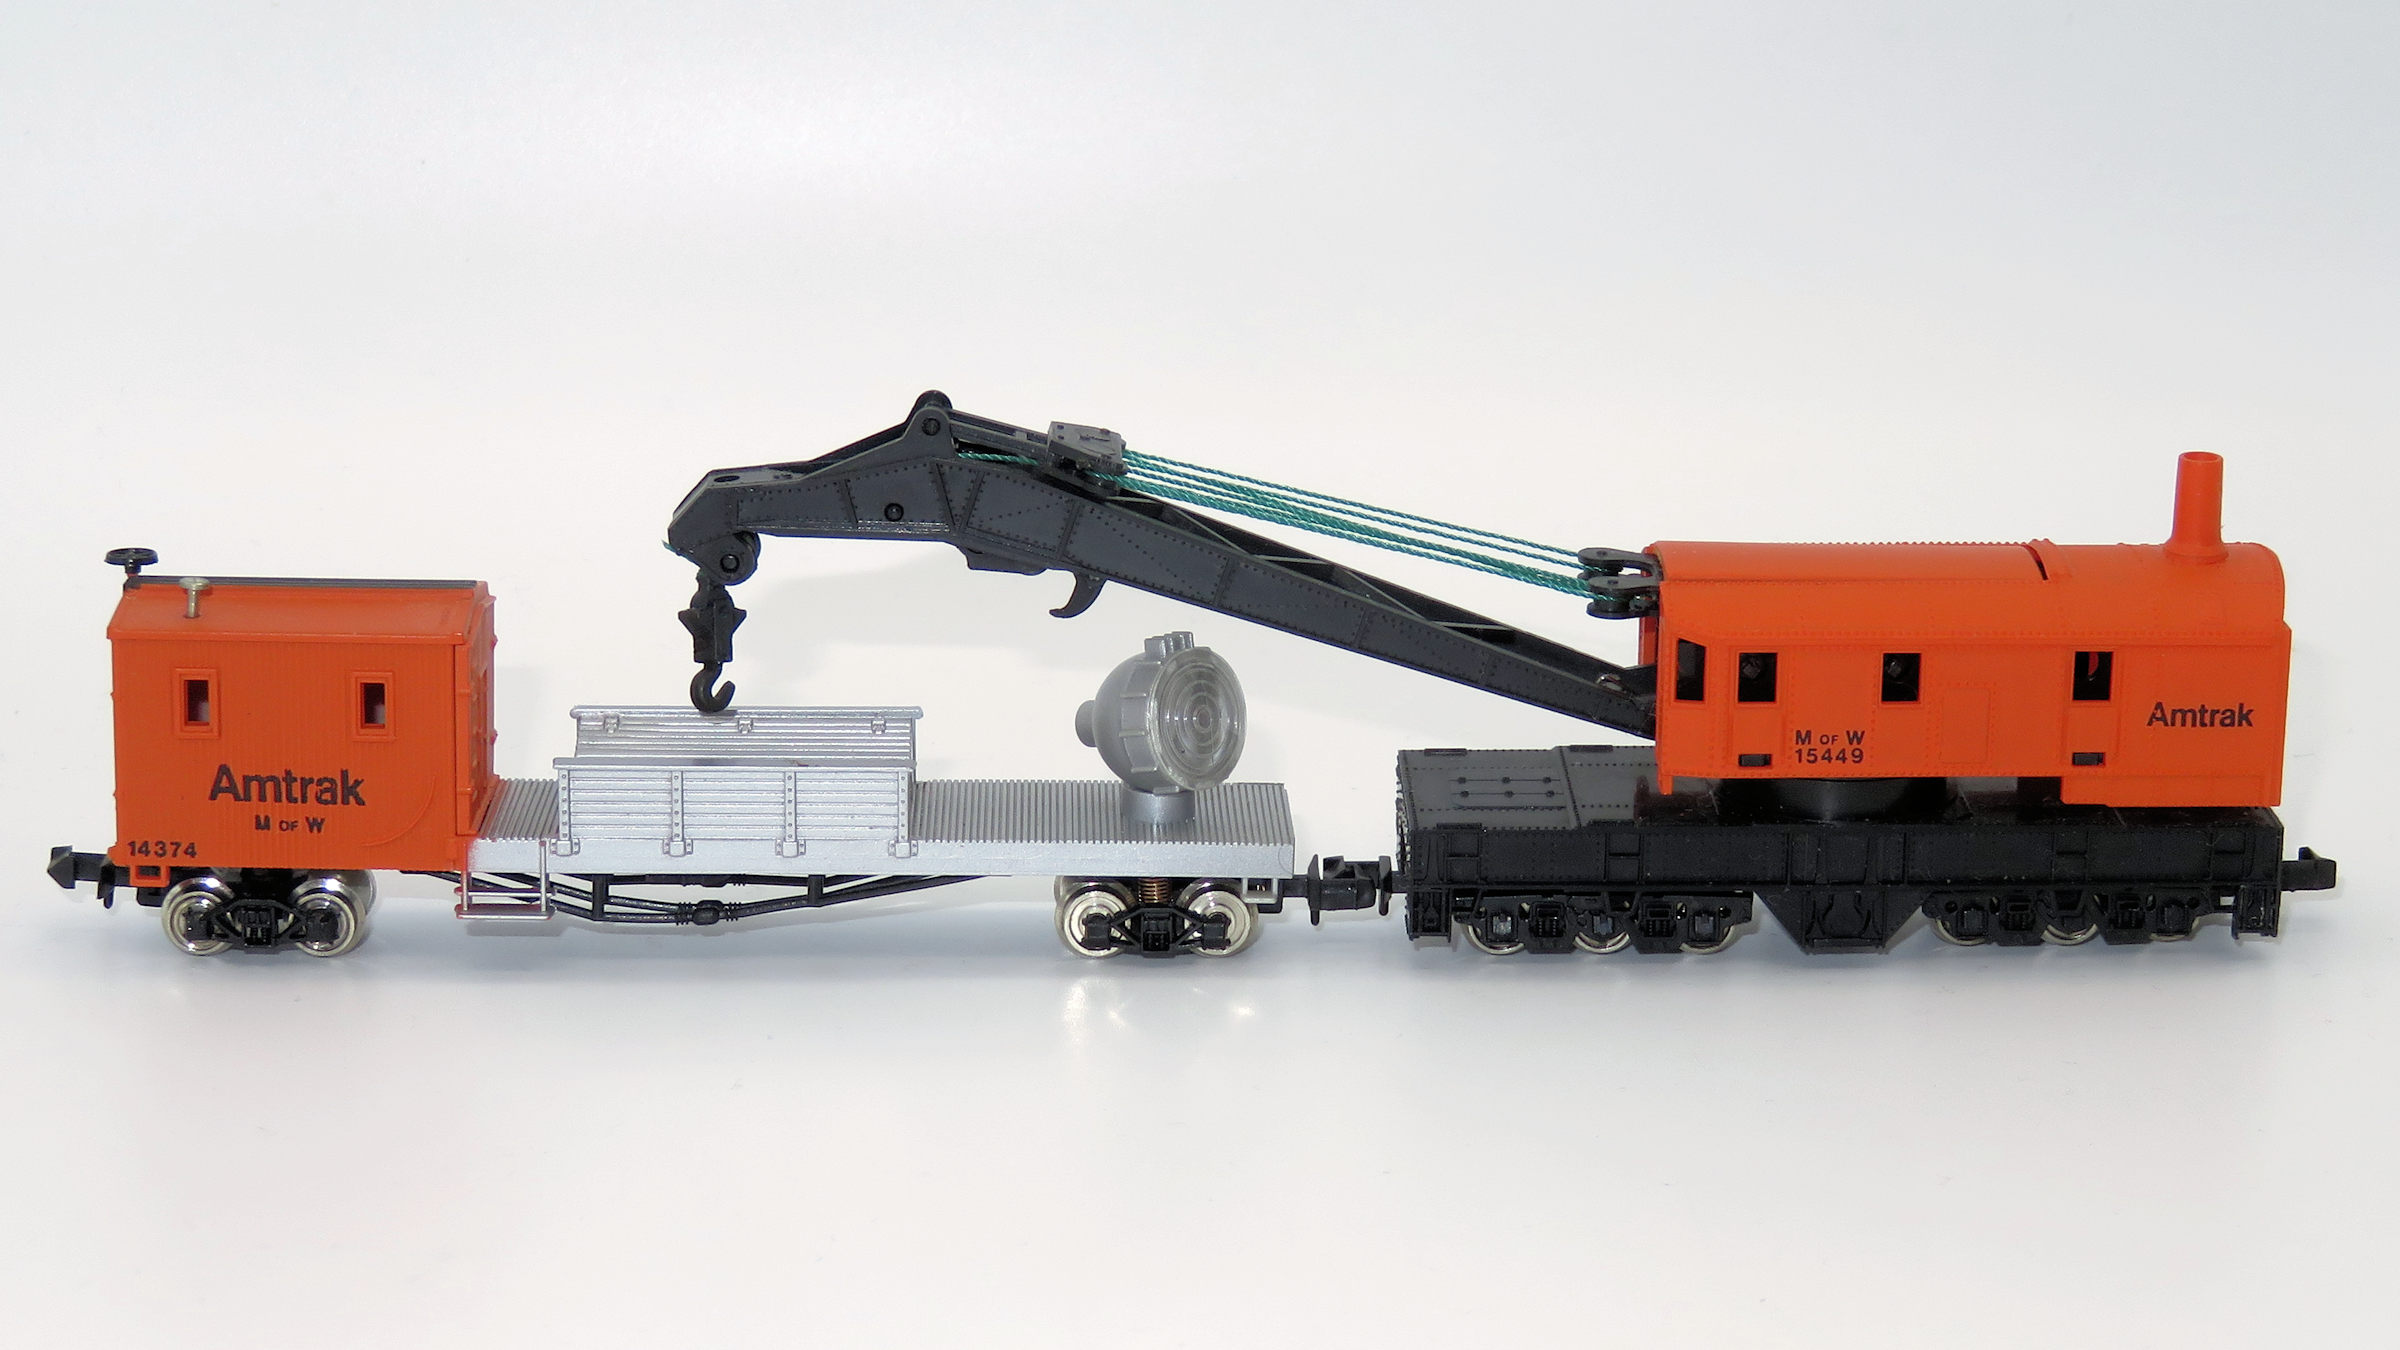 N Scale - Bachmann - 56-1212-05 - Wrecking Crane - Amtrak - 15449, 14374